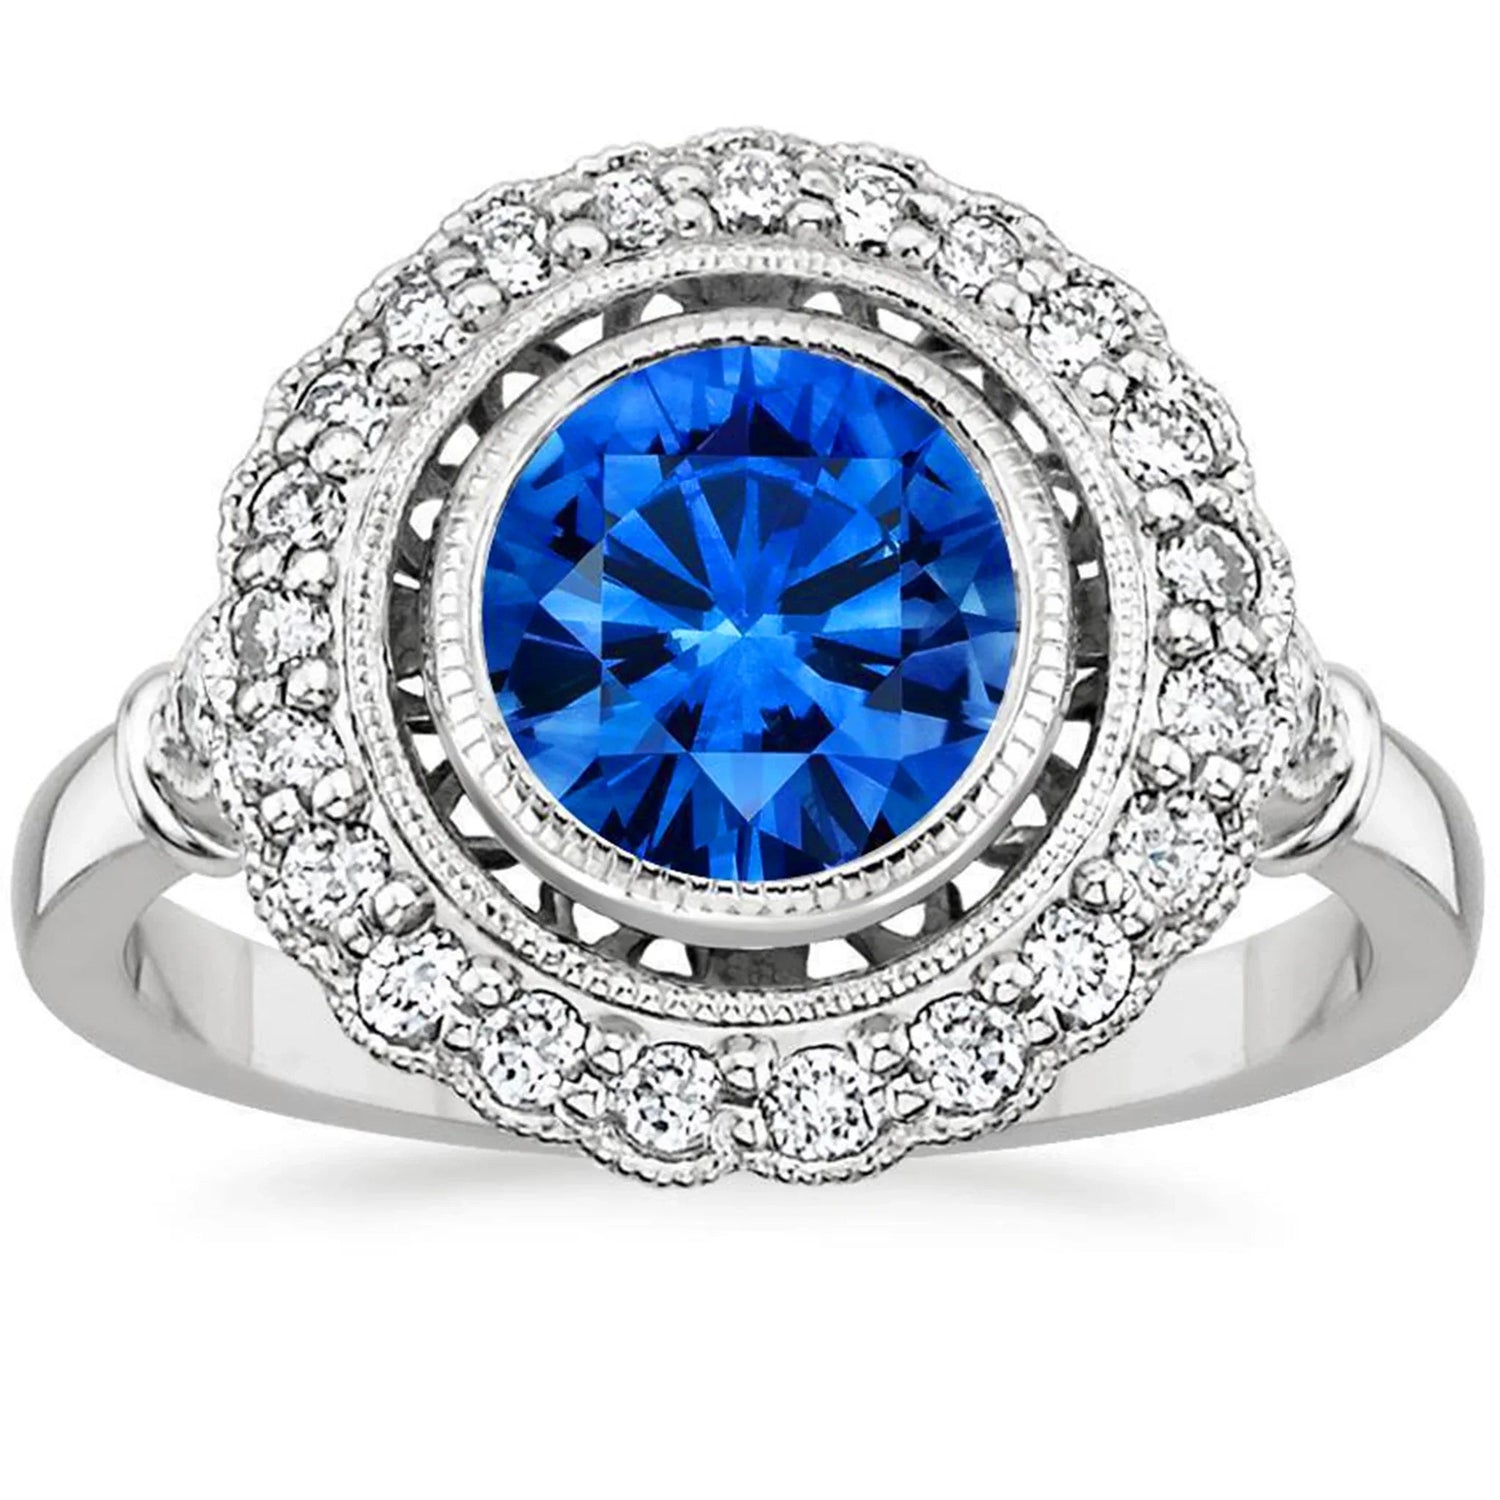 Bijoux Art Nouveau New Halo Blue Round Saphir Diamond Ring